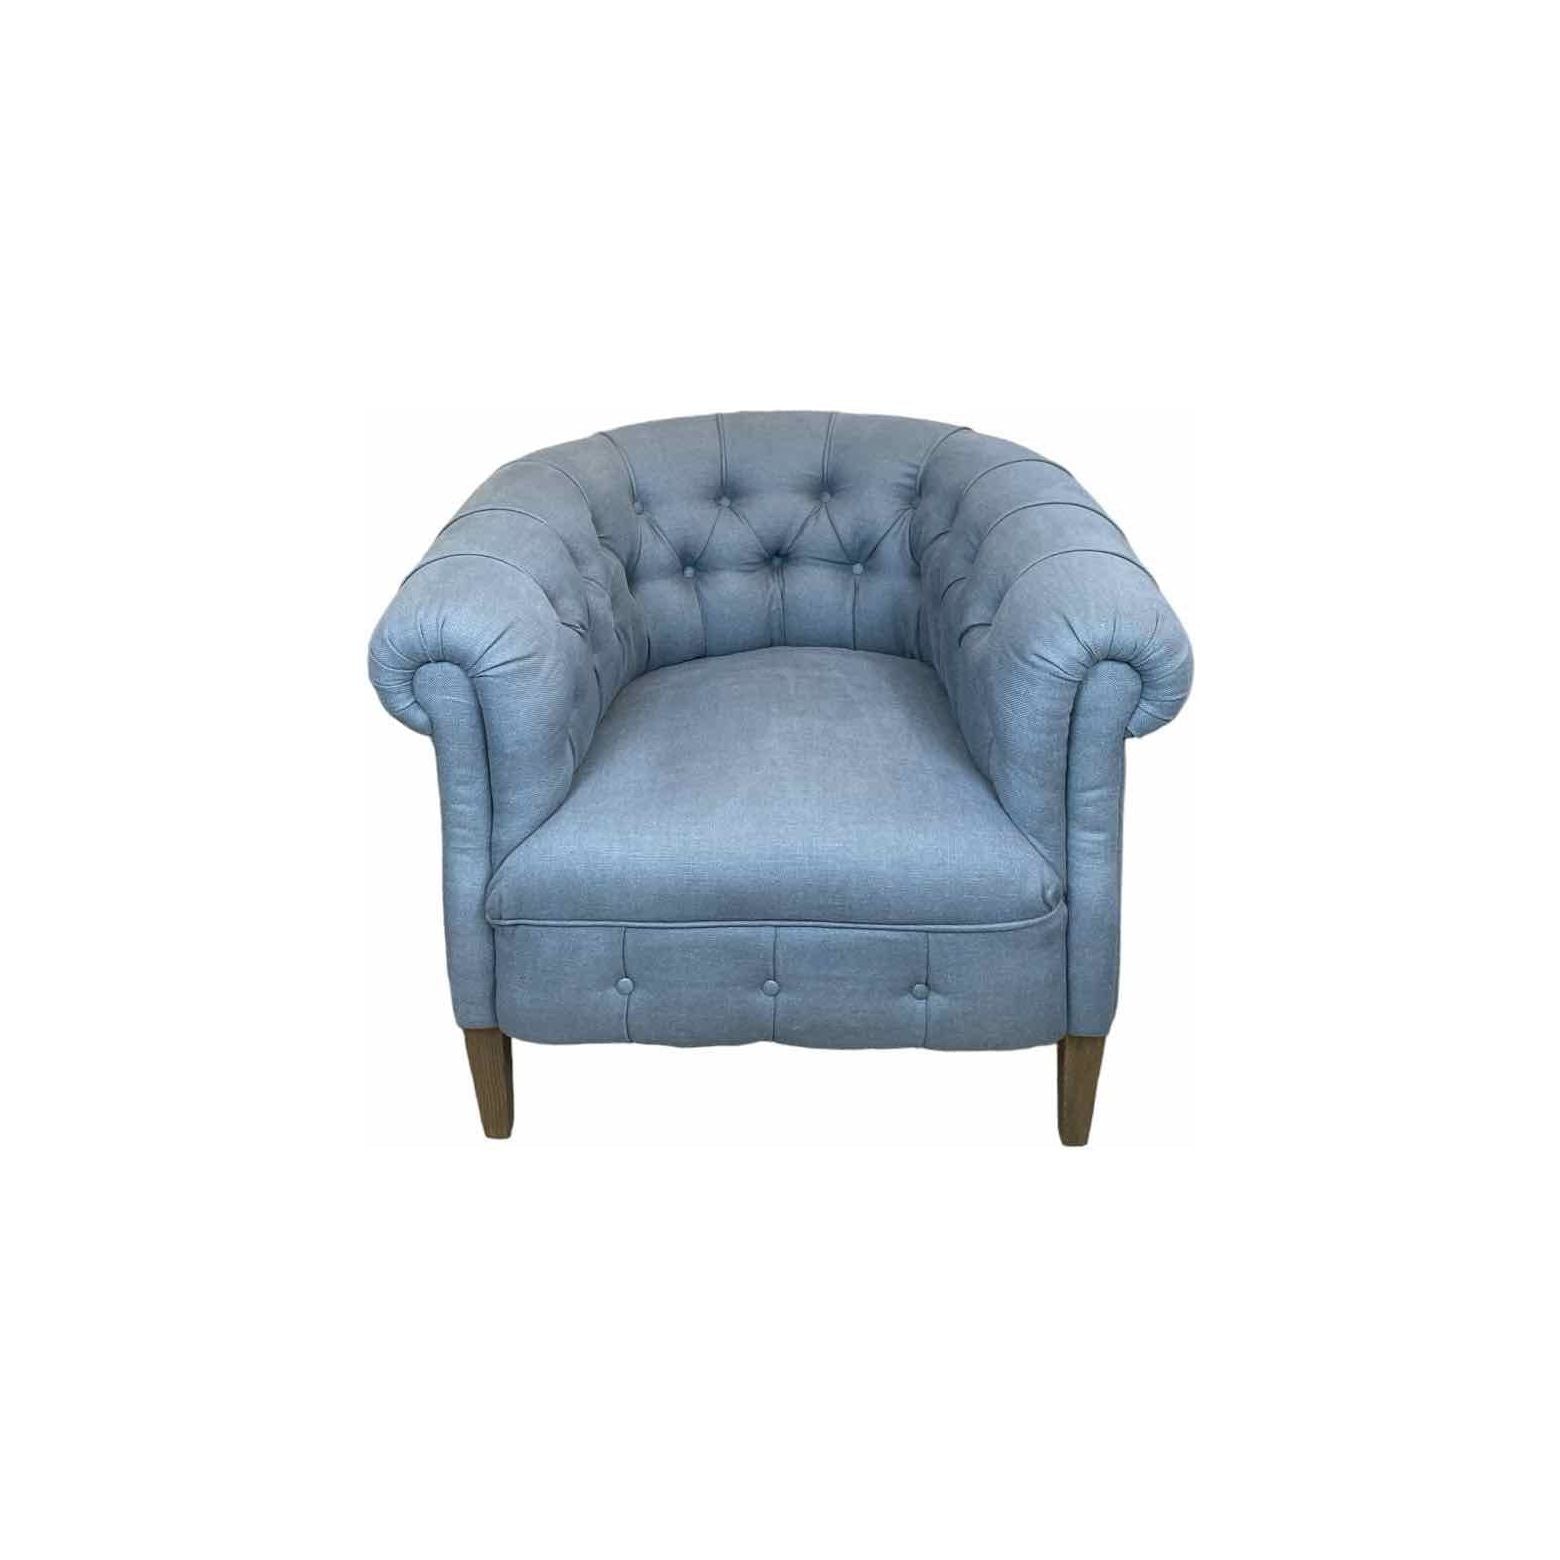 RH Kensington Chair in Blue